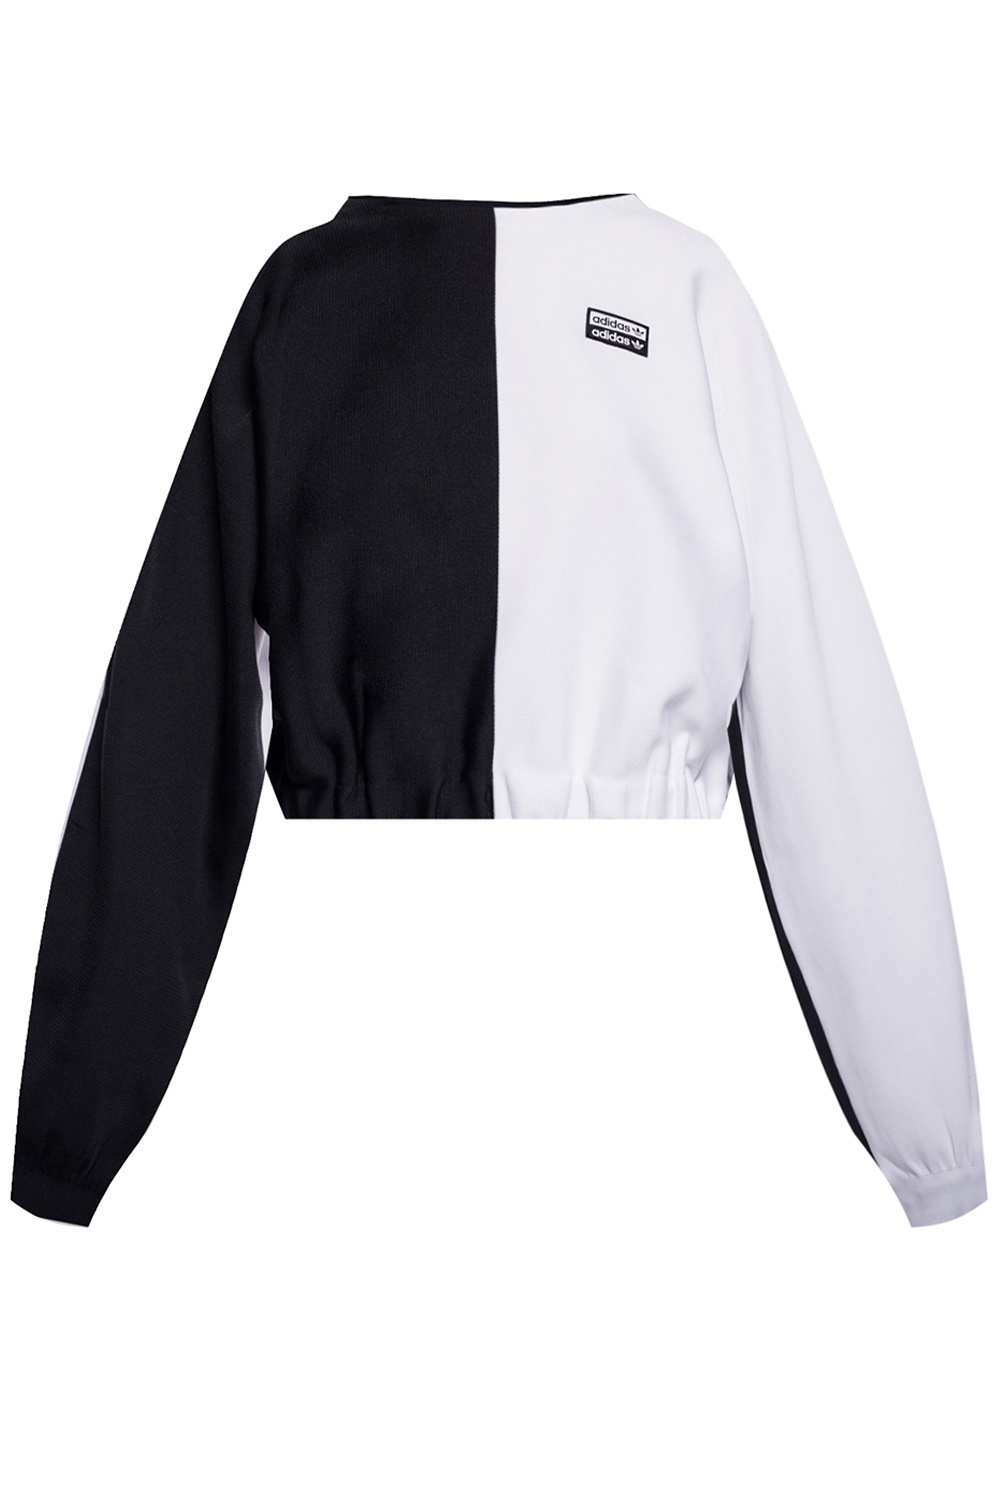 adidas black white sweatshirt